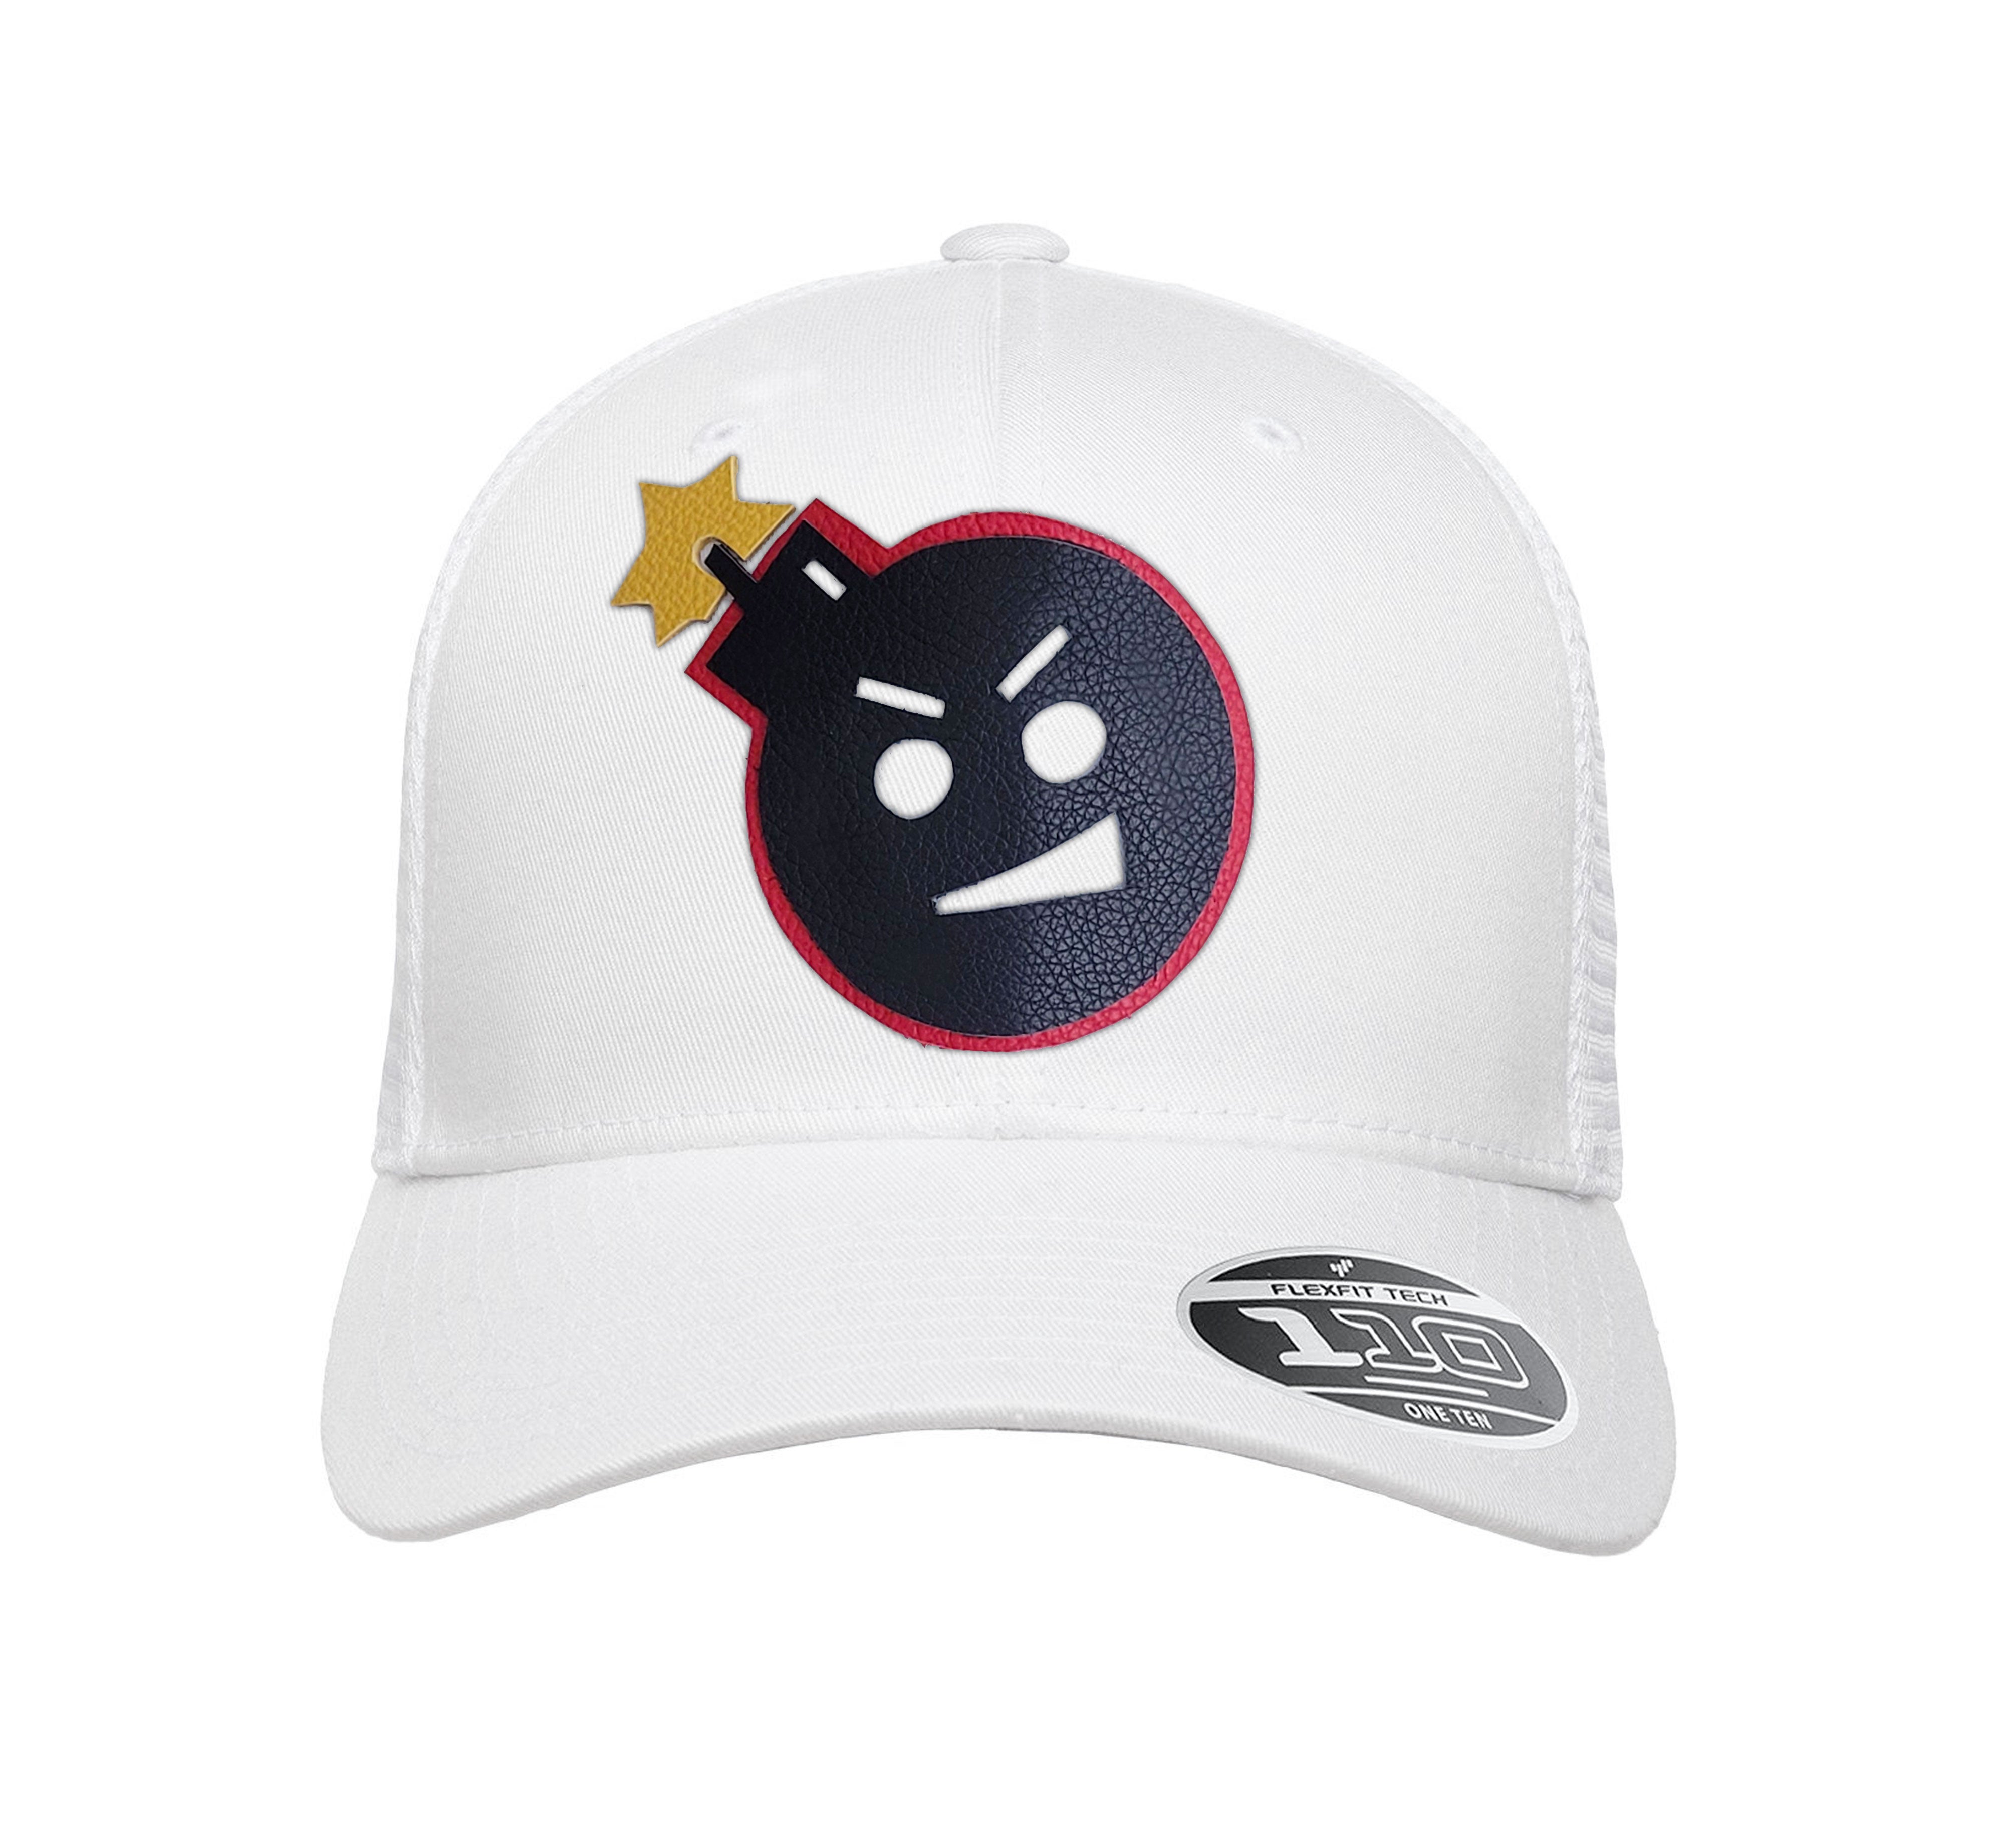 NEW! The RMG Angry Bomb Flexfit Snapback 110 Baseball Hat